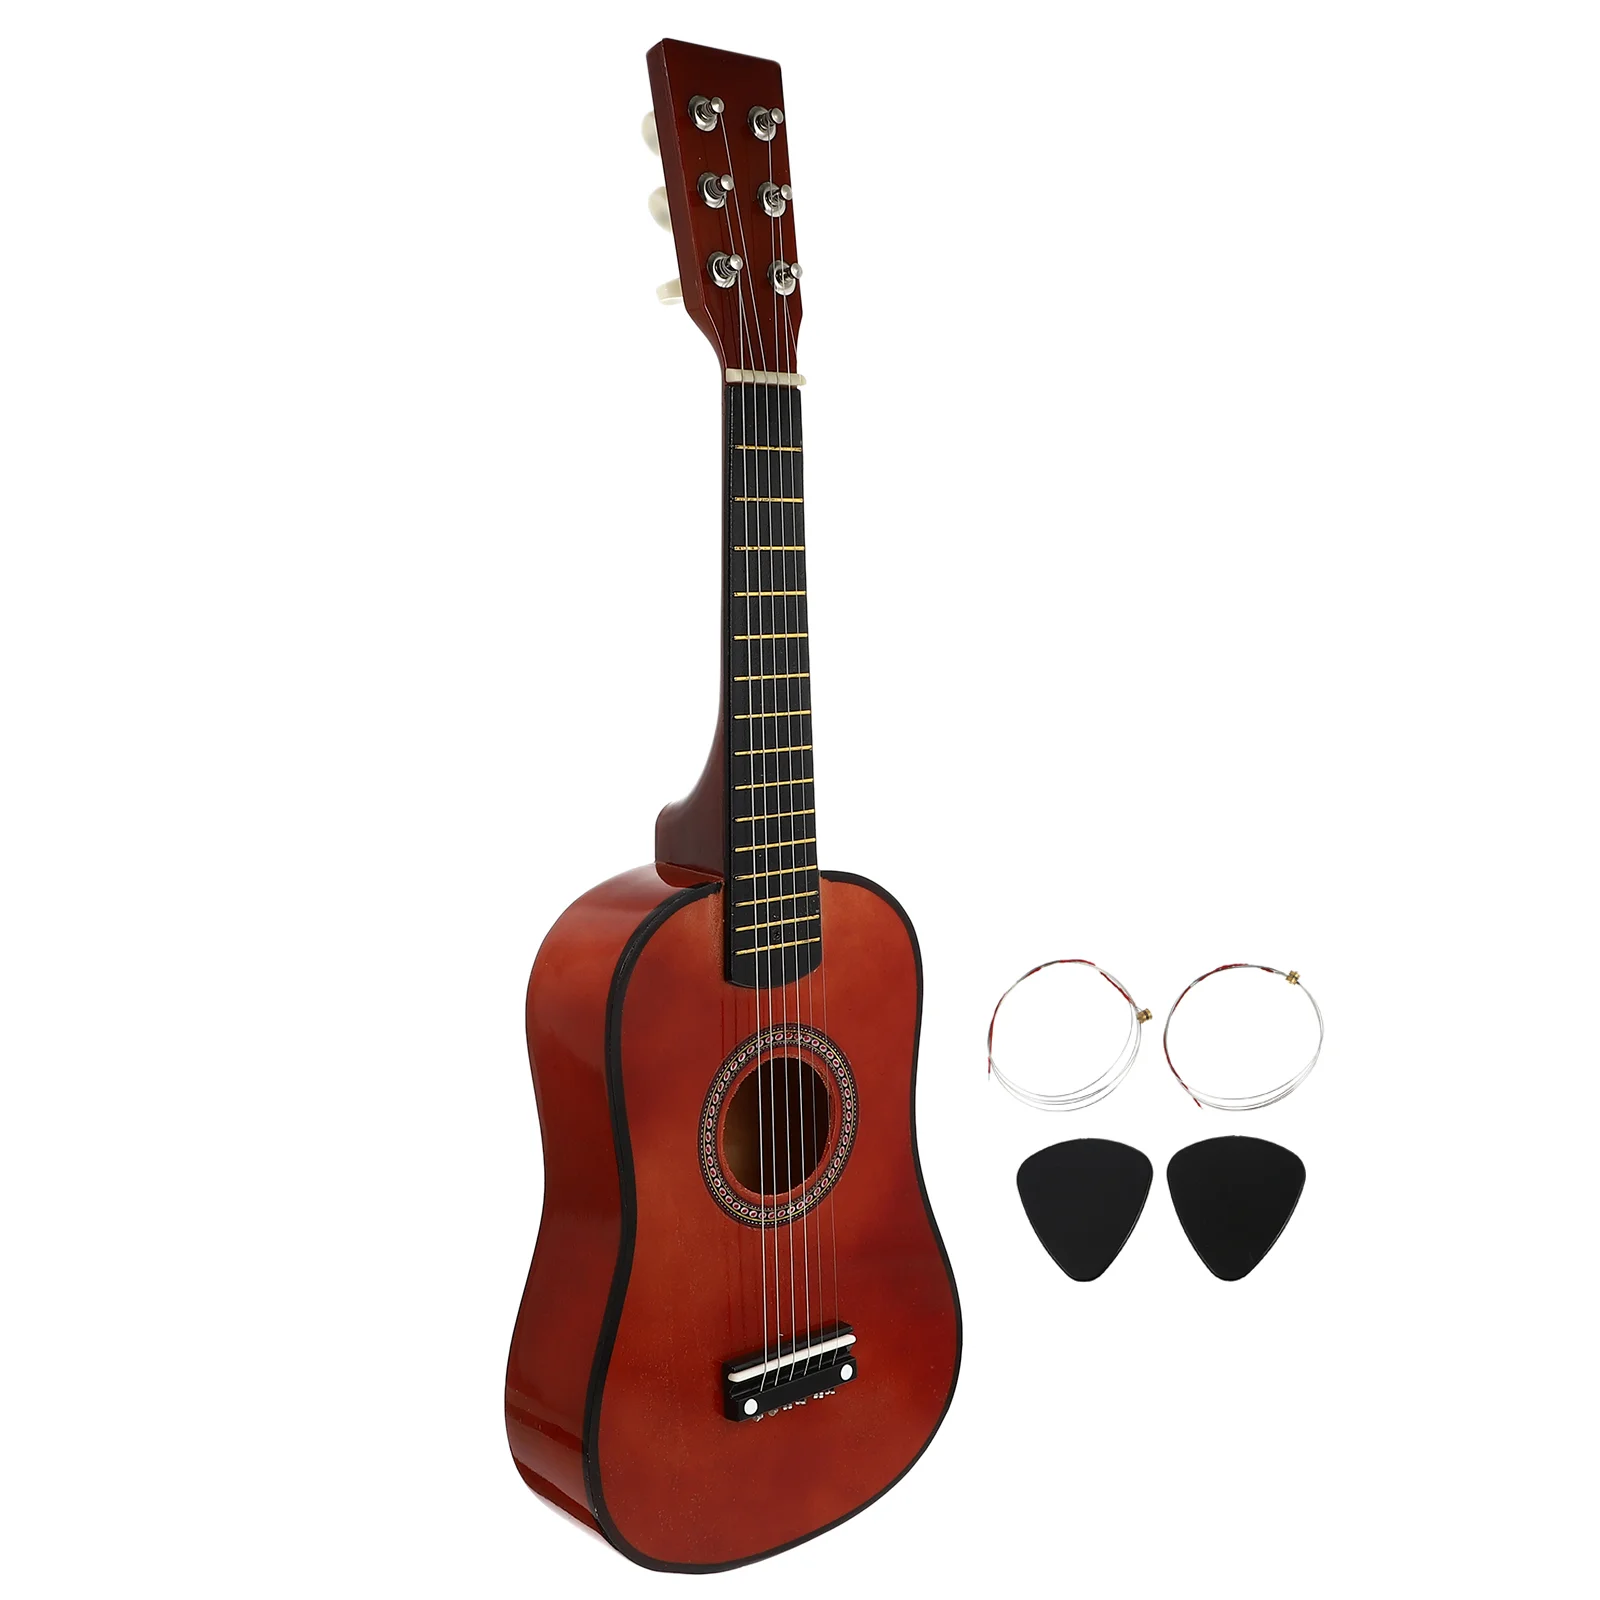 

Guitar Kids Acoustic Toy 6String Wooden Inch Imitation Beginner Vintage Style Folk Musical Awakening Classical Children Ukulele